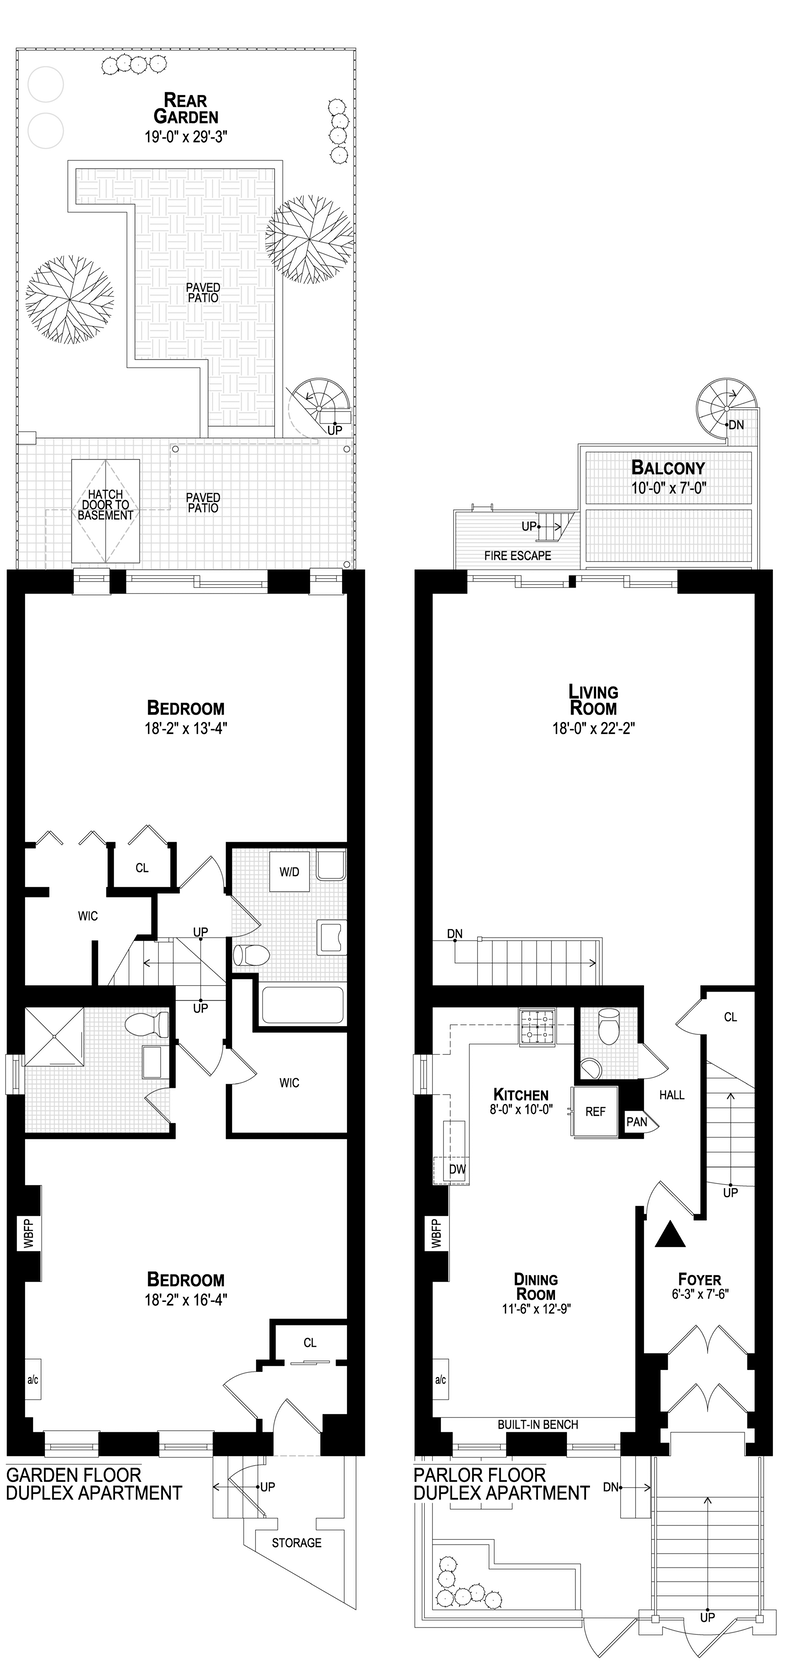 Floorplan for 110 West, 15th Street, 1